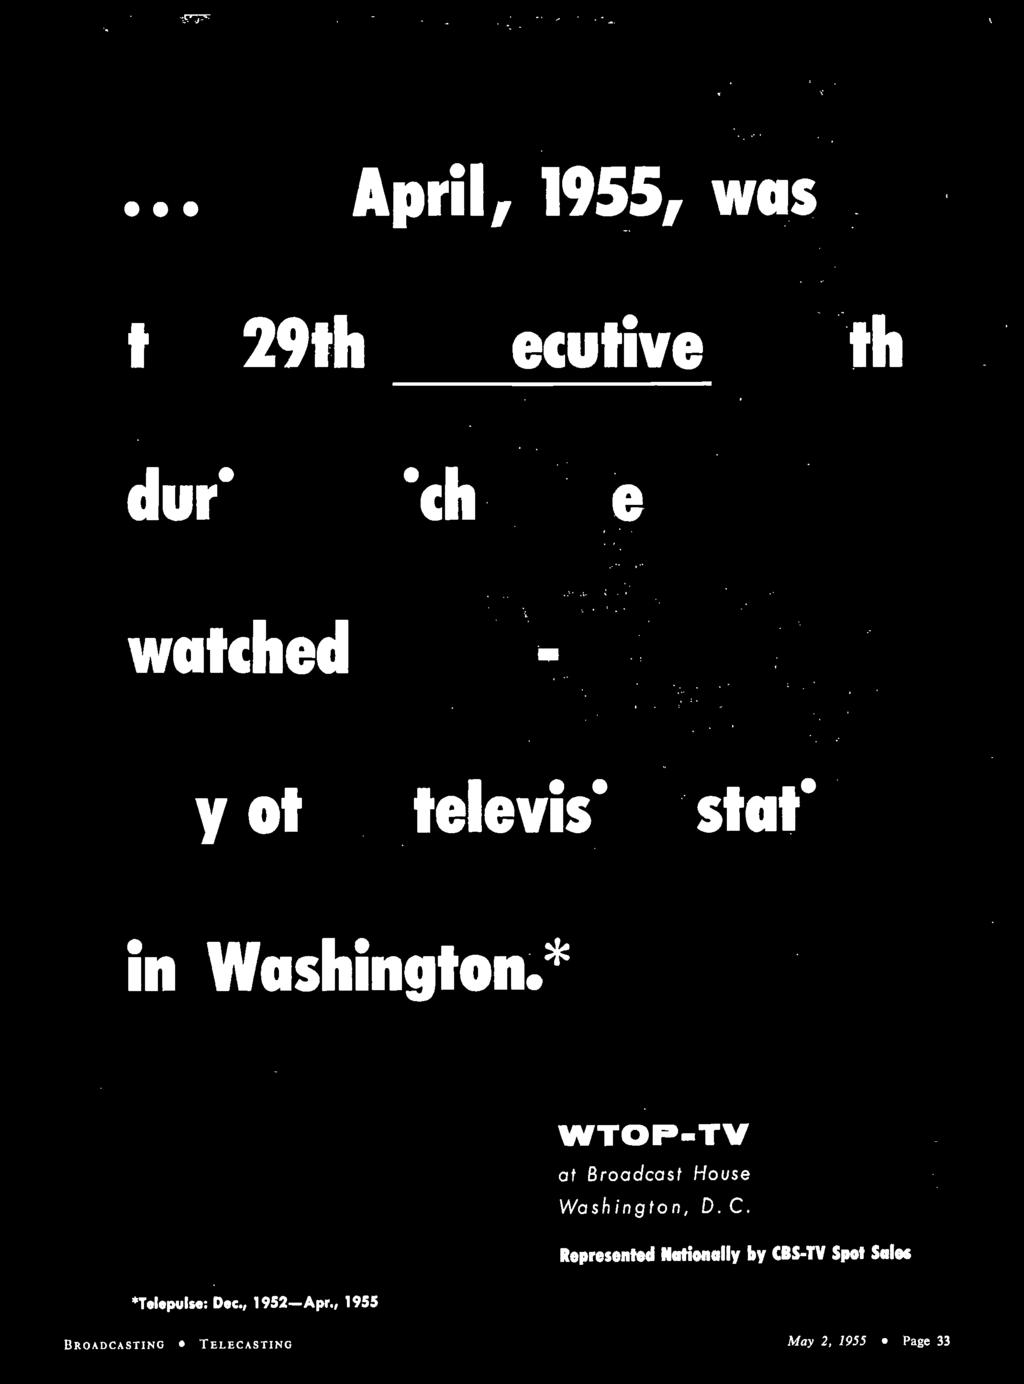 * WTOP -TV at Broadcast House Washington, D. C.